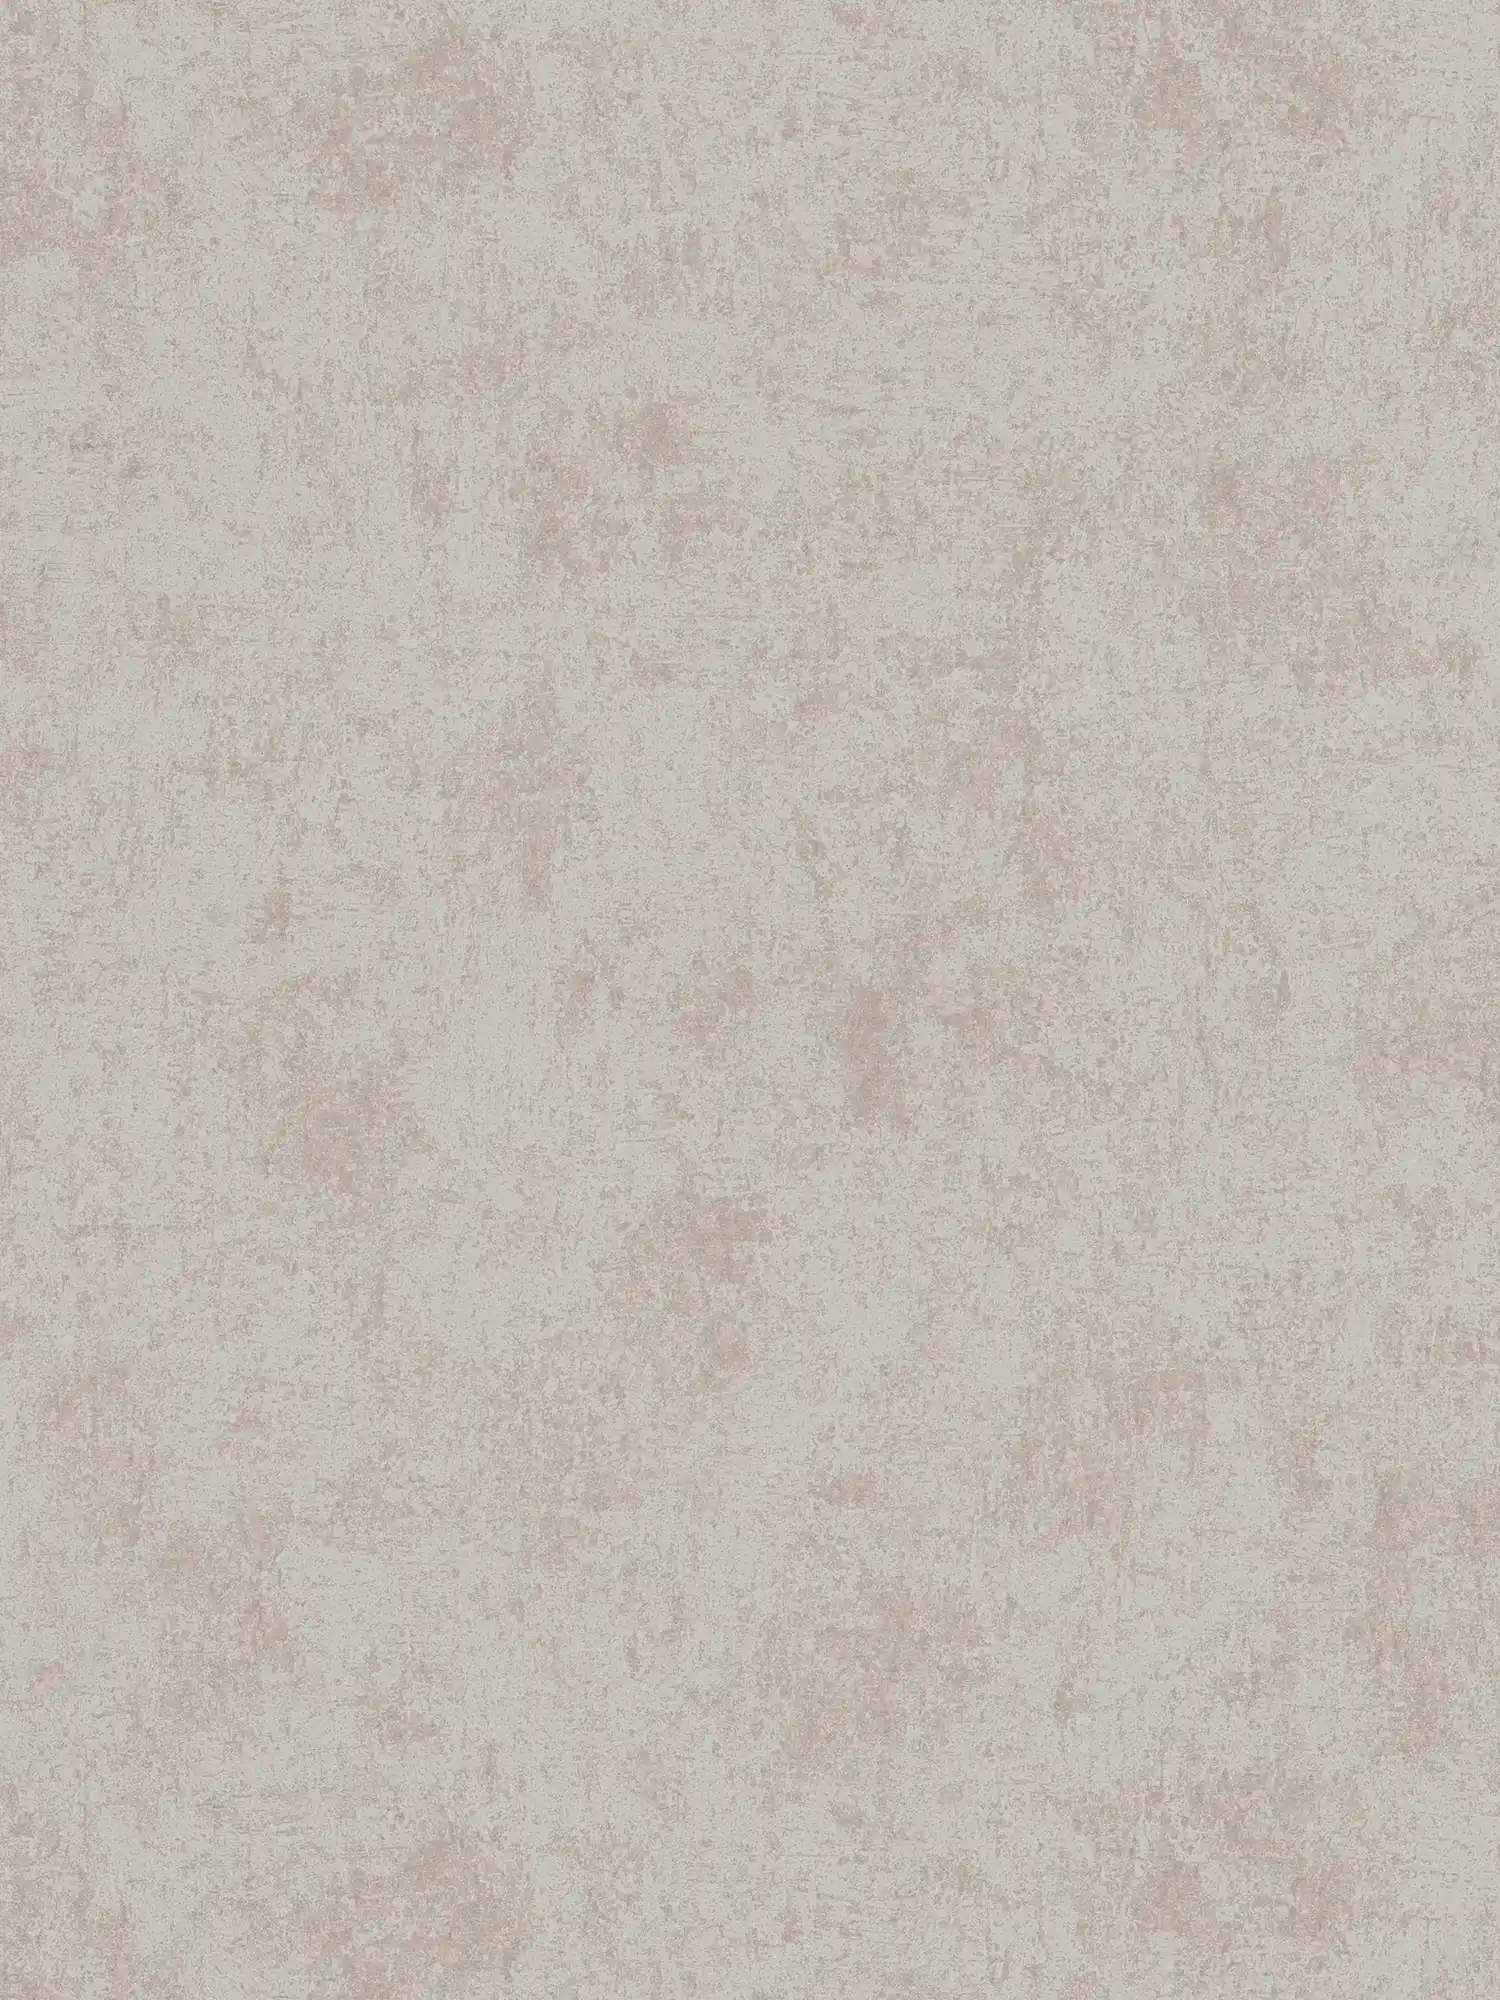 Wallpaper in metal optics glossy smooth - silver, grey, metallic
